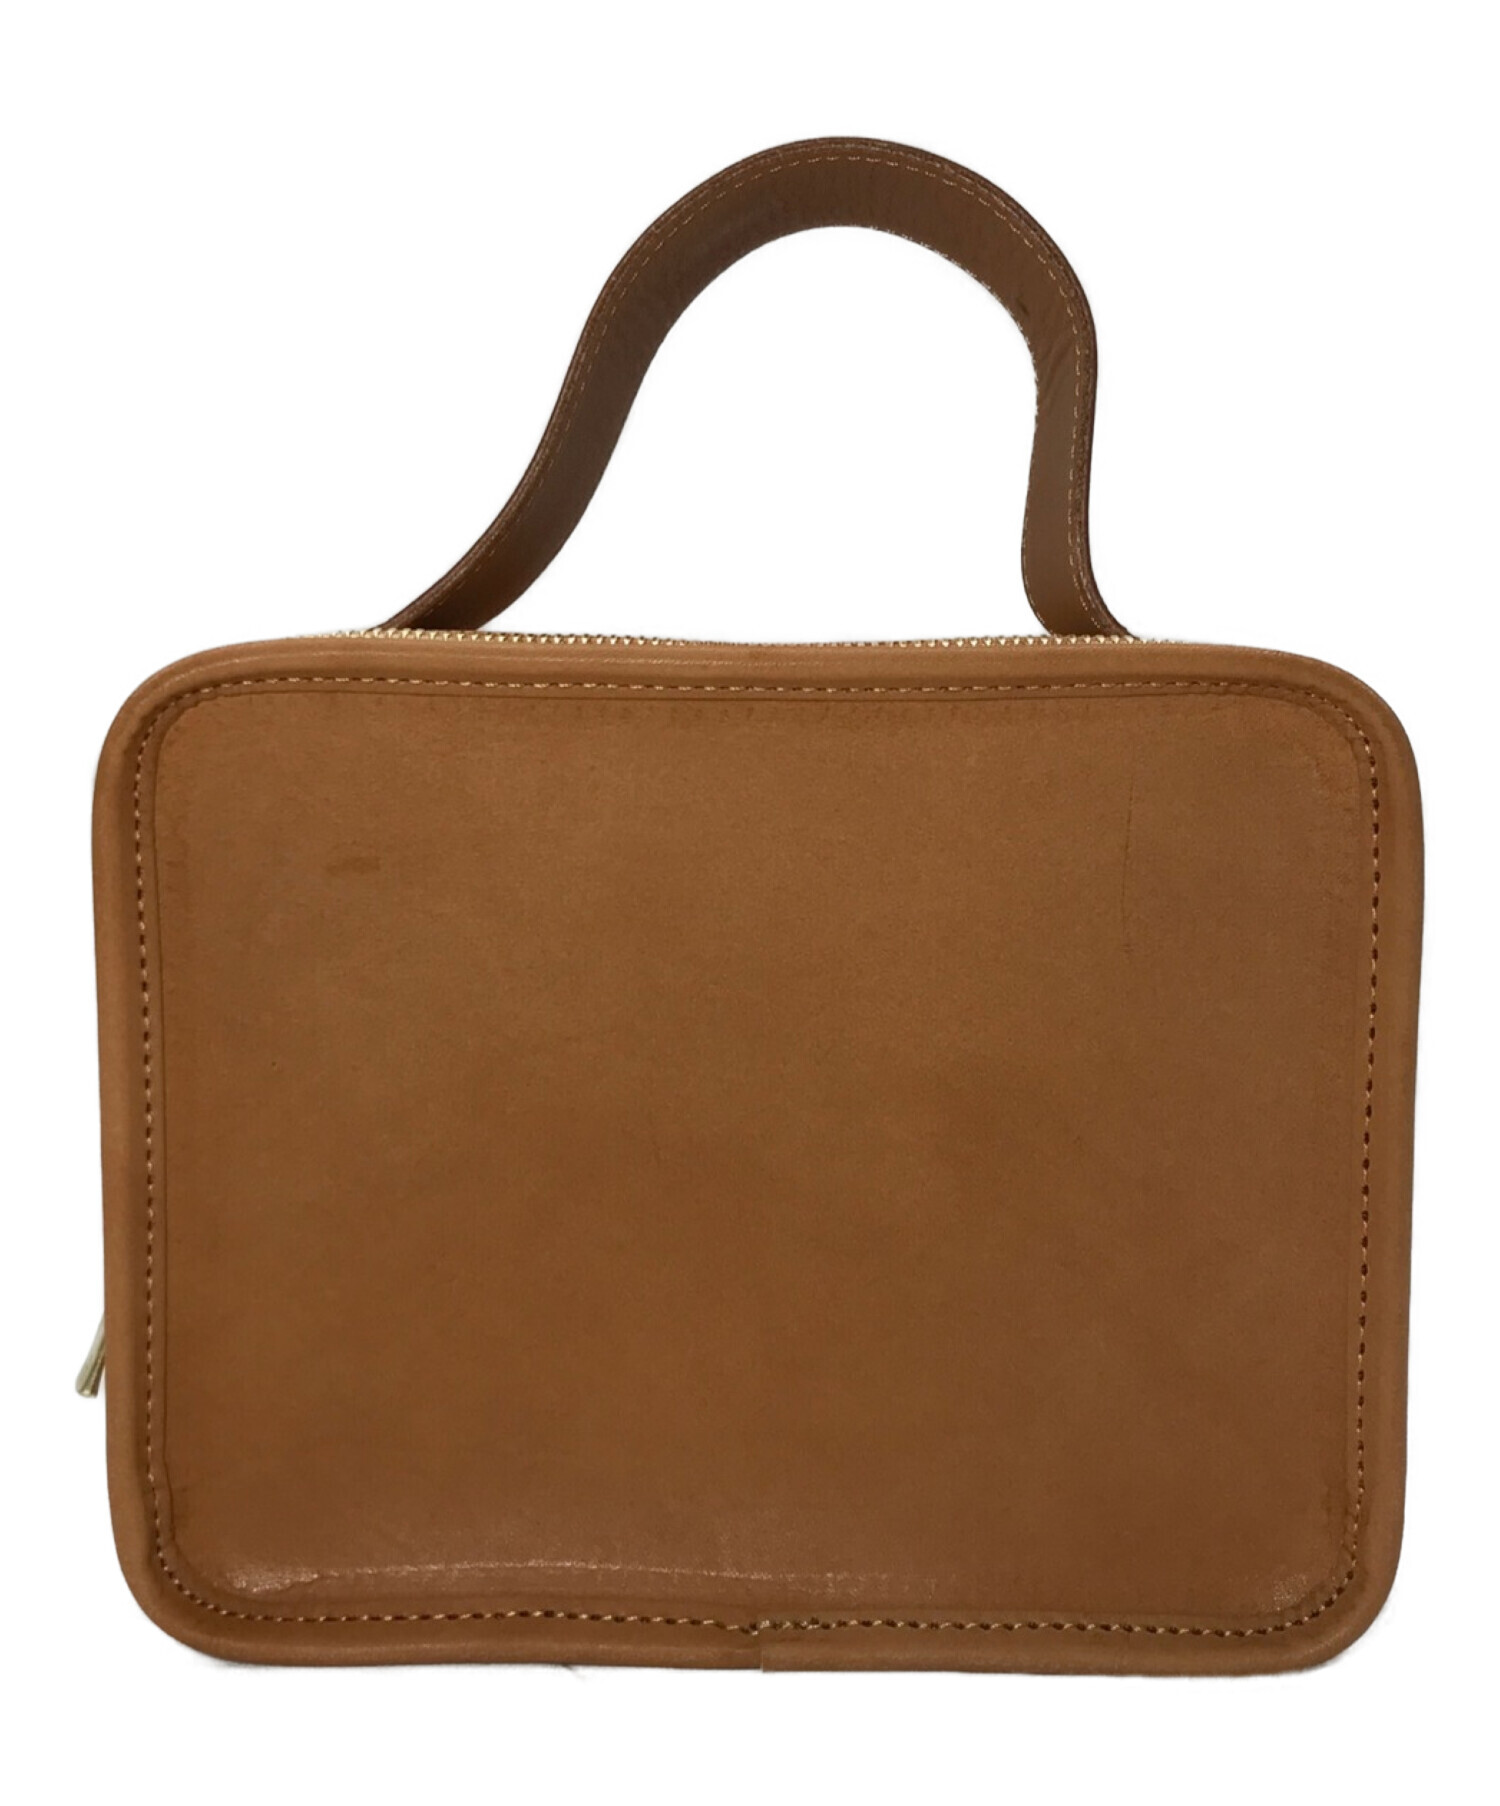 【LIFESTYLIST】Camel Leather Mini Book Bag